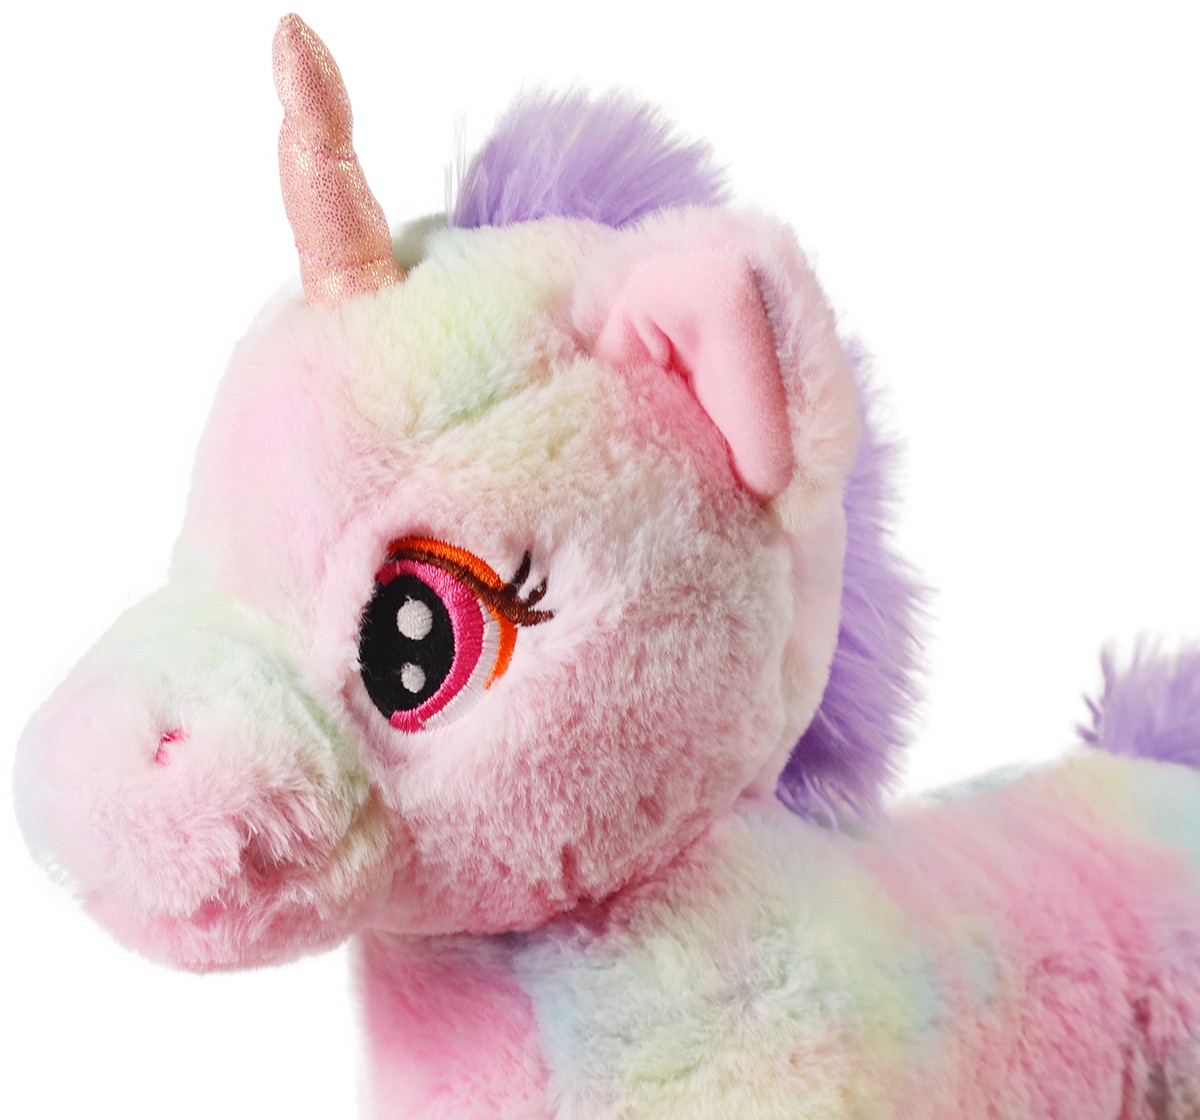 Mirada 32cm standing unicorn with glitter horn Multicolor 3Y+